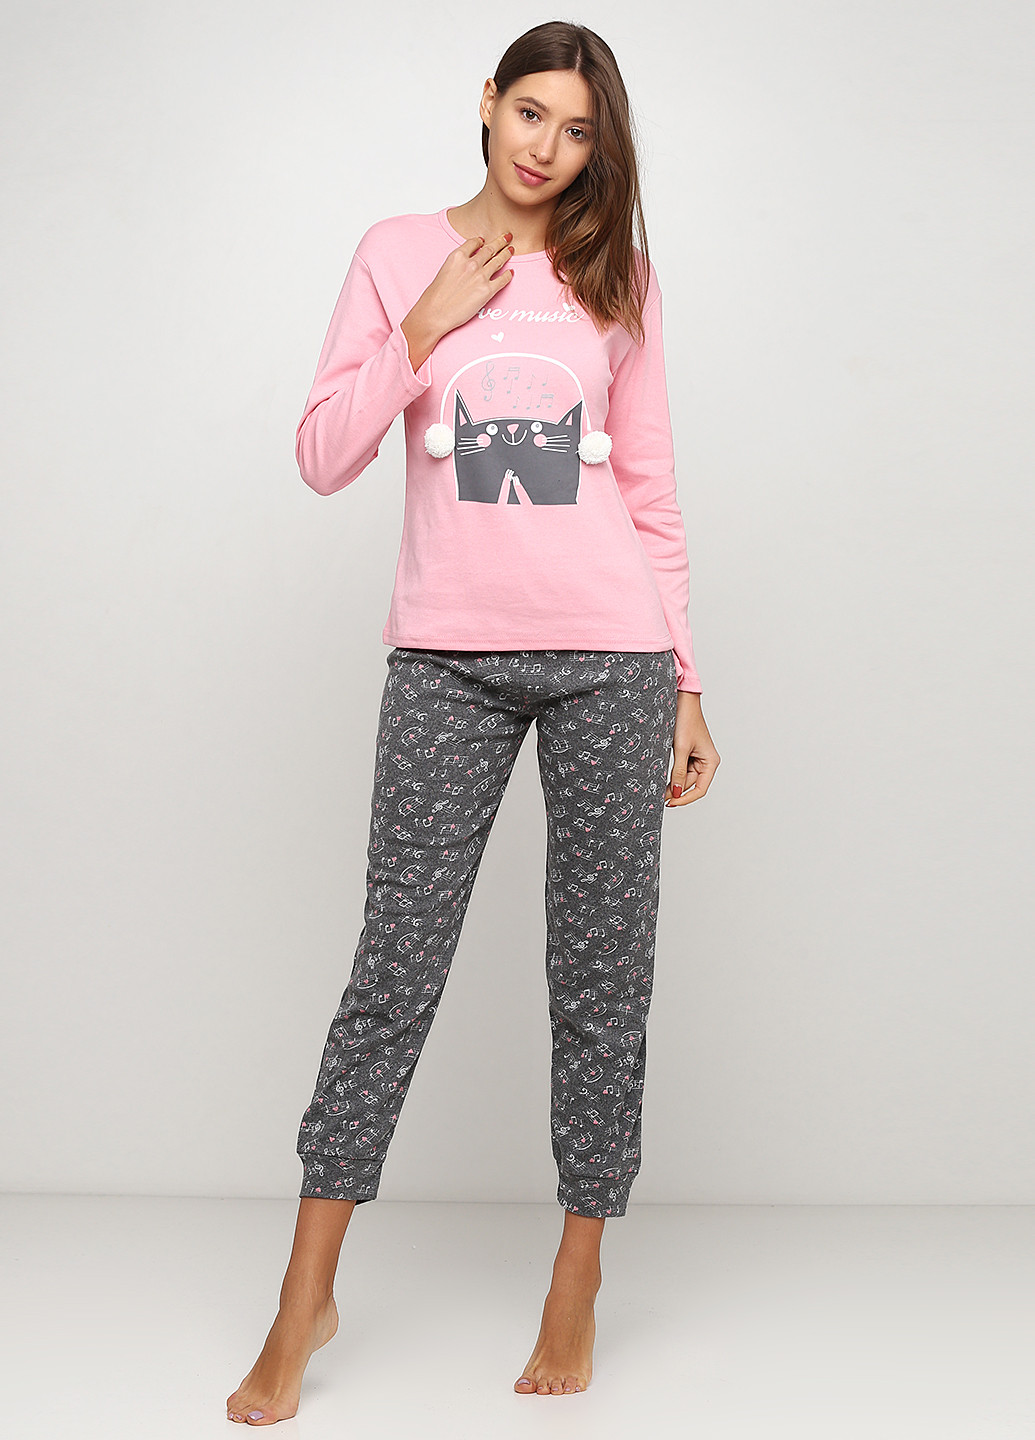 Розовая всесезон пижама (лонгслив, брюки) лонгслив + брюки Fawn